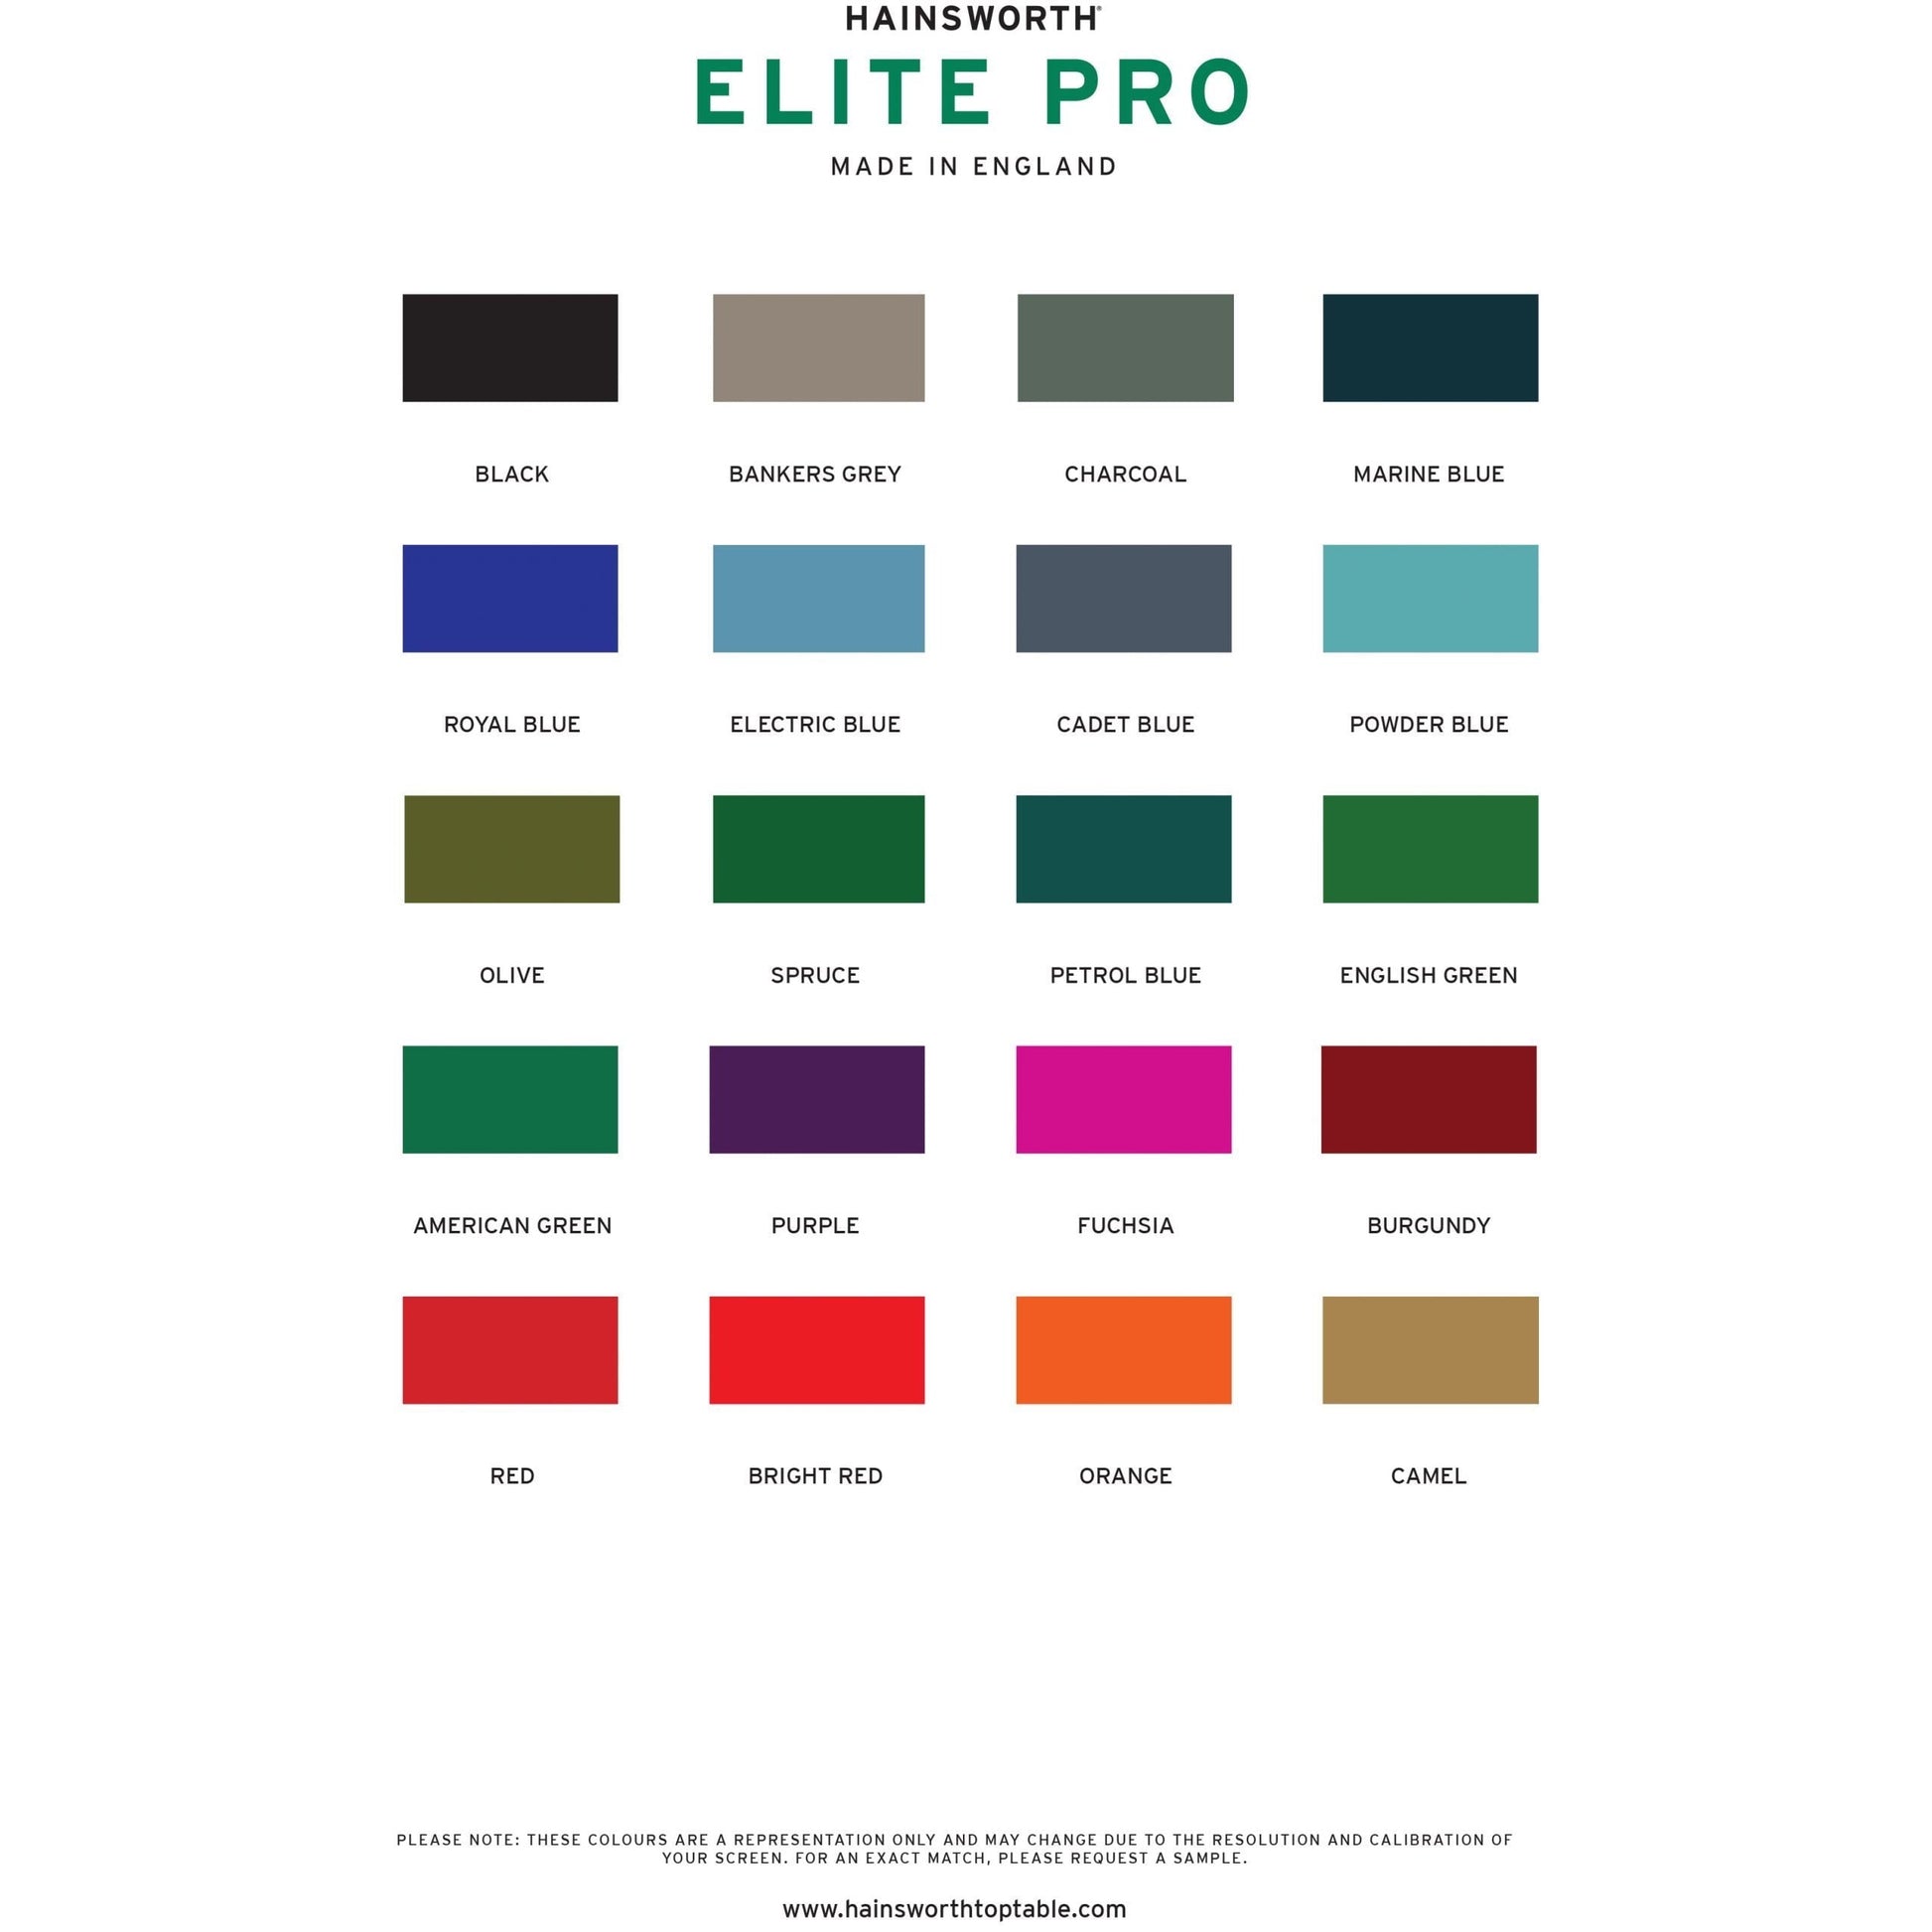 Hainsworth Elite Pro Pool Table Cloth